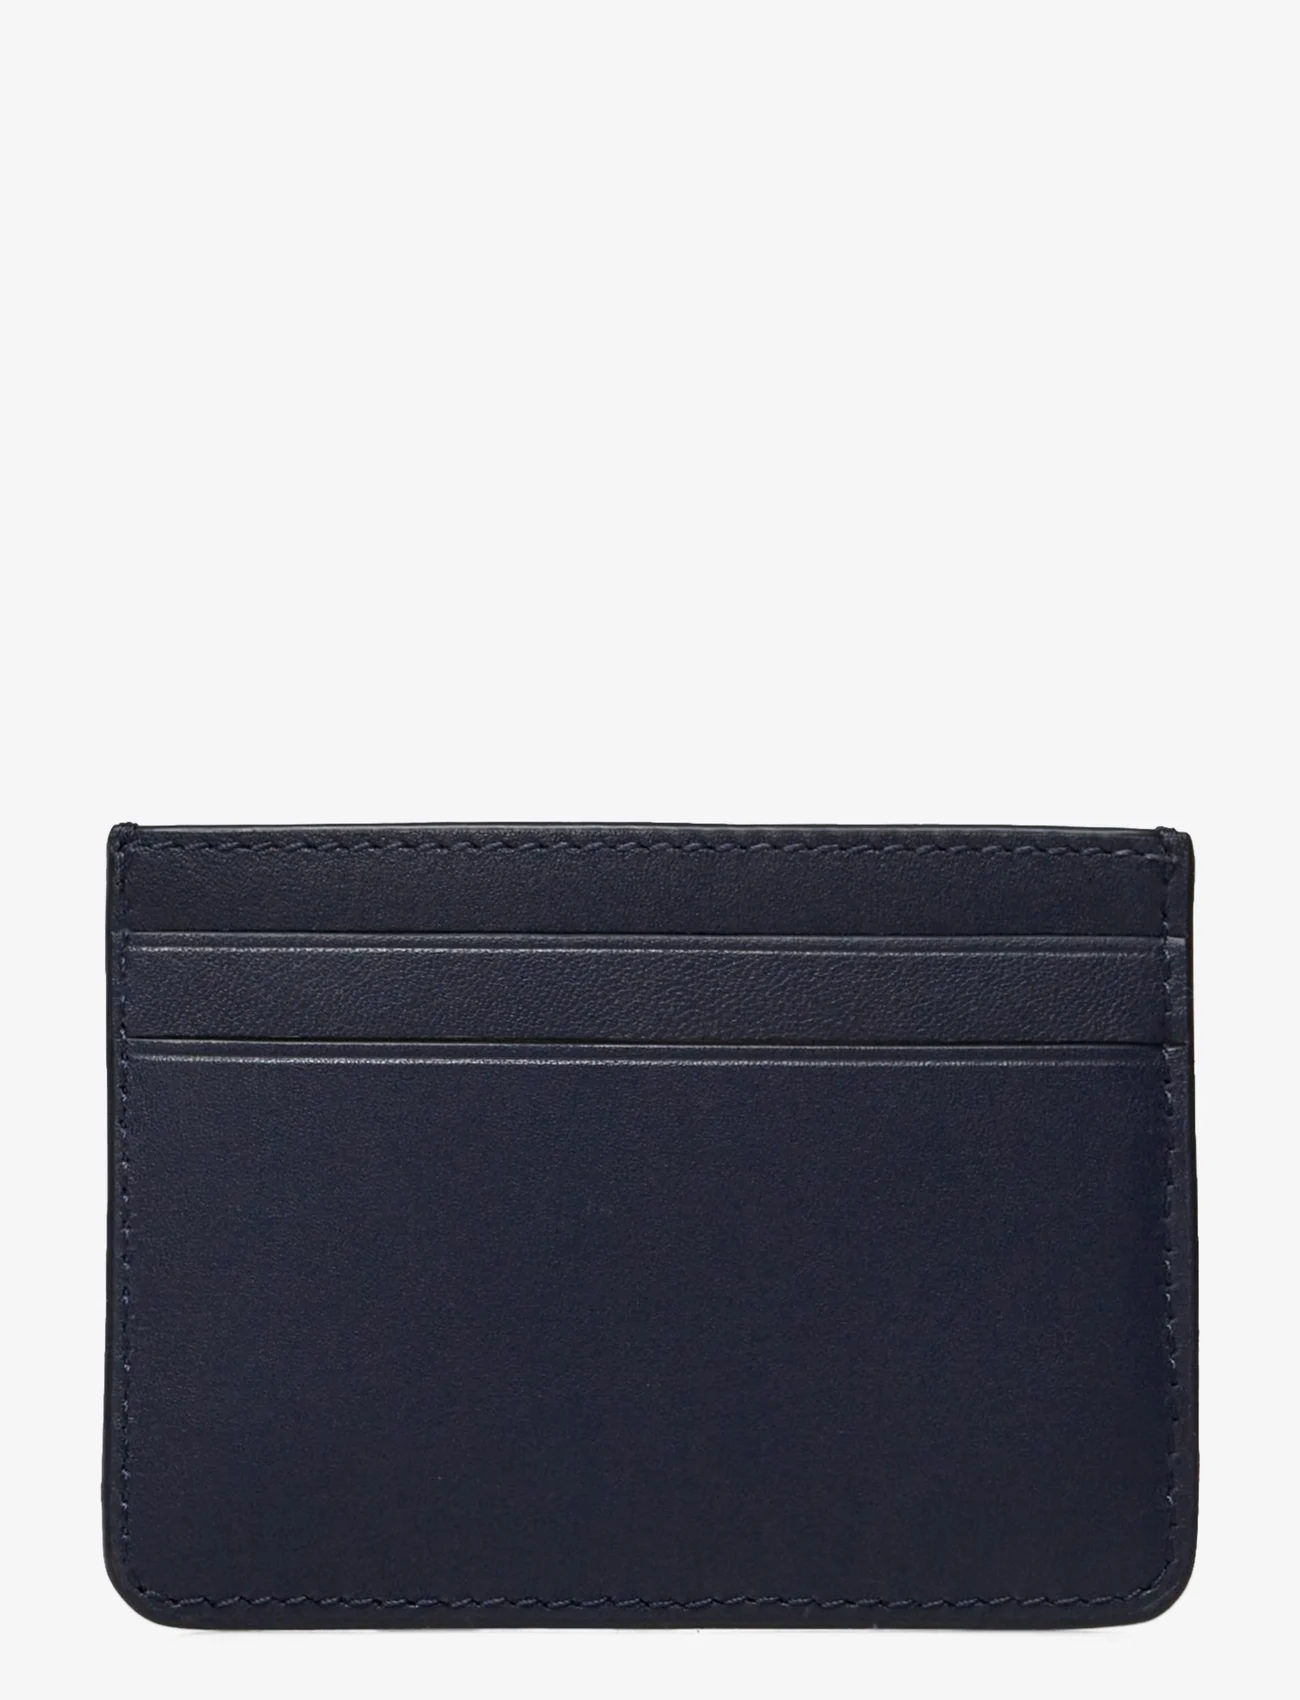 Lauren Ralph Lauren - Leather Card Case - kortelių dėklai - refined navy - 1